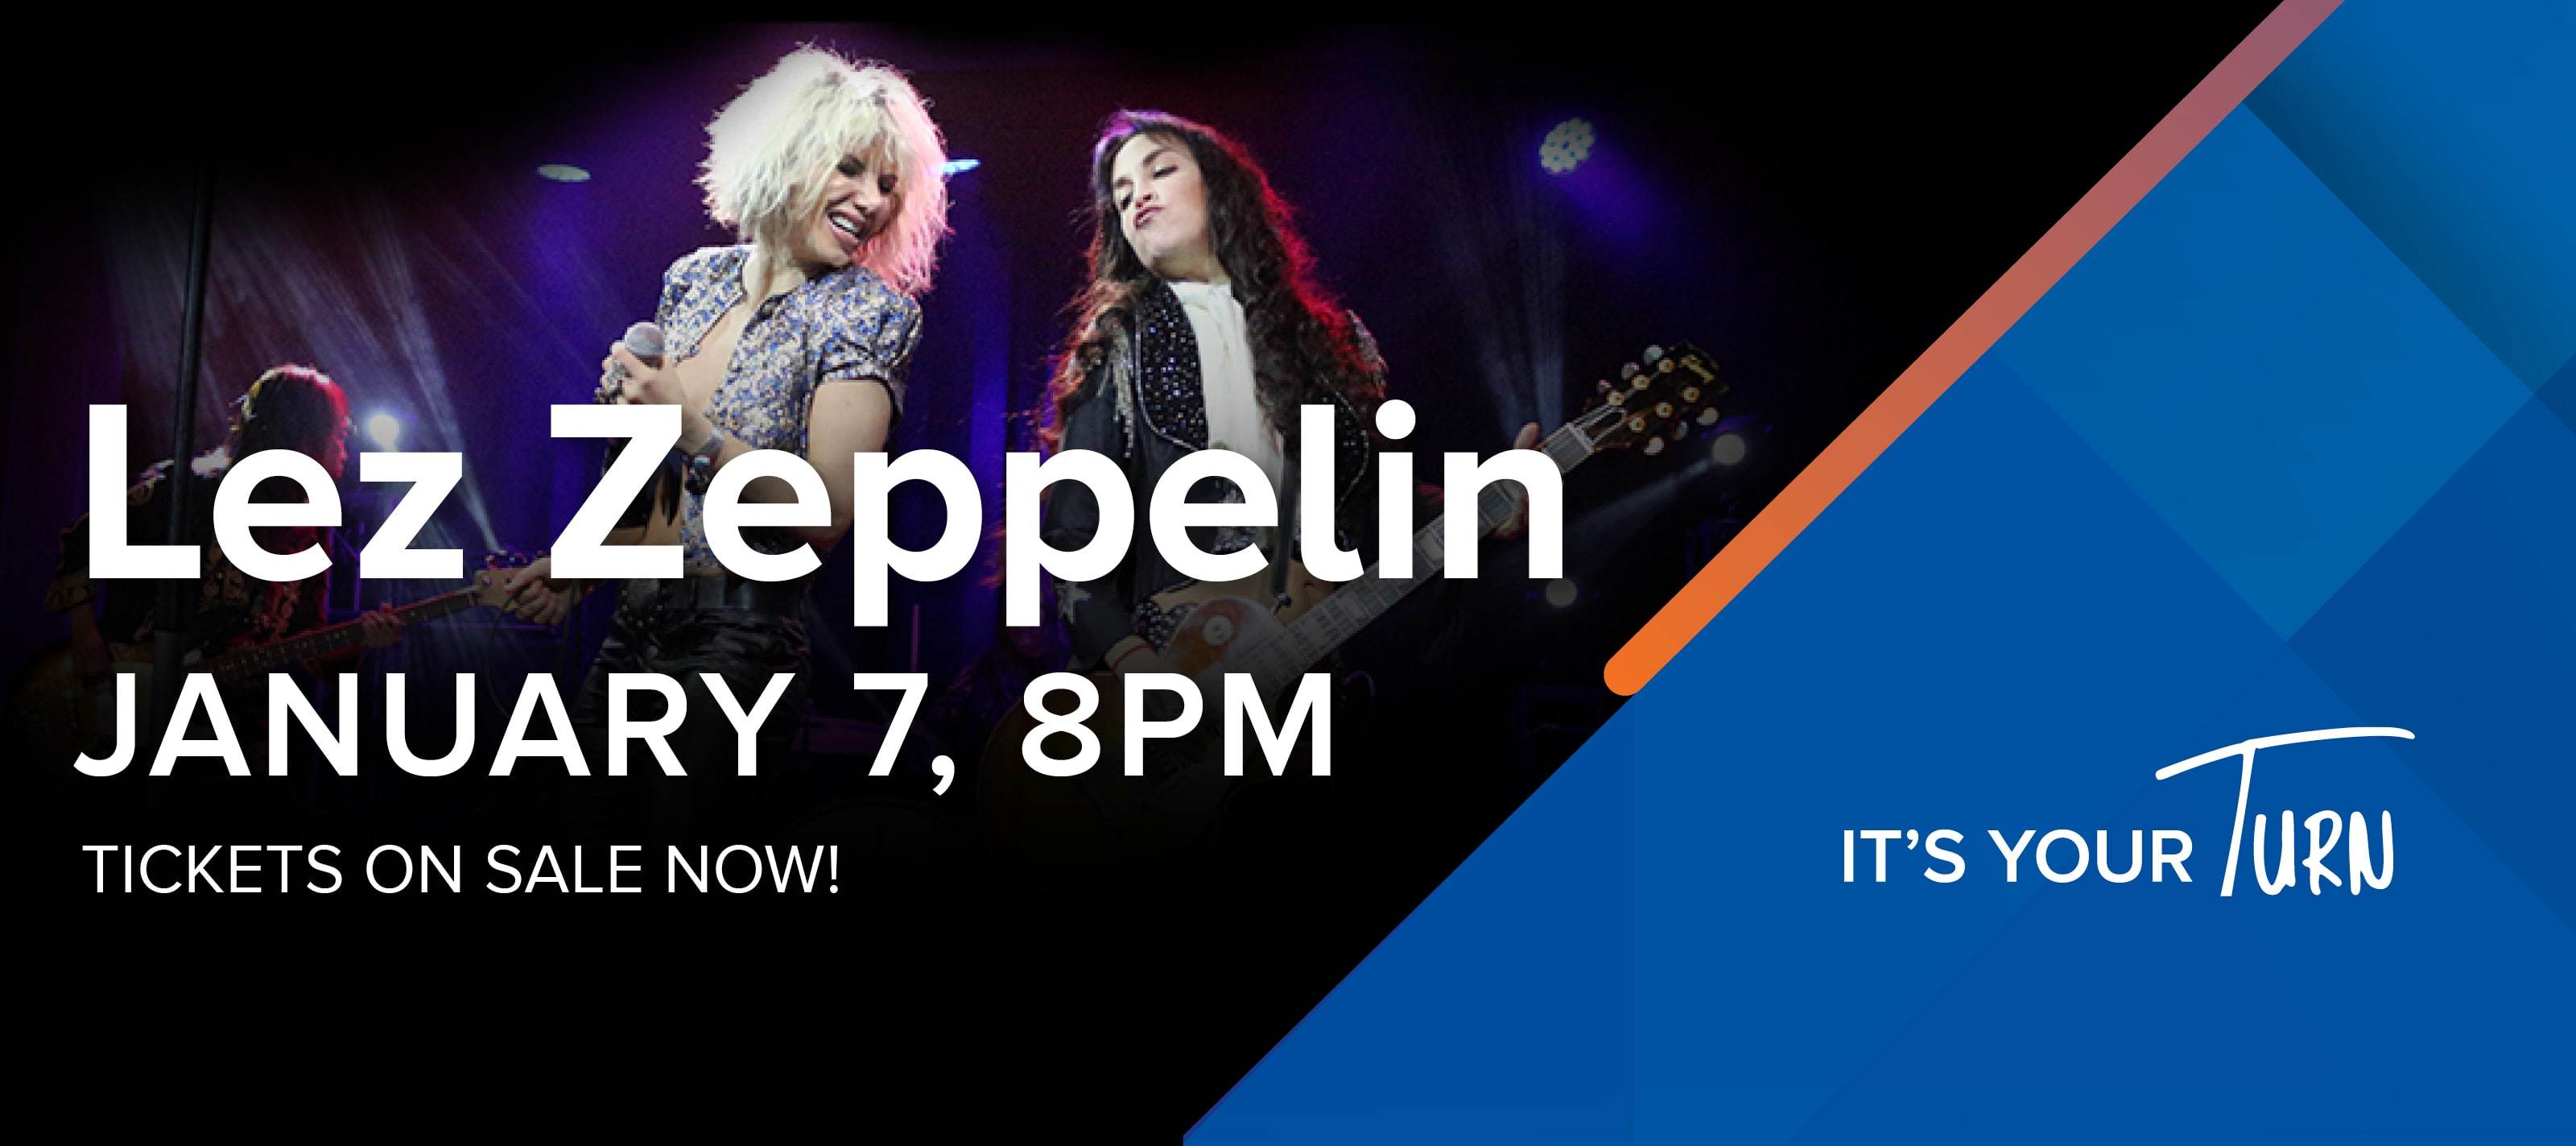 Lez Zeppelin January 7 8pm Tickets On Sale Now